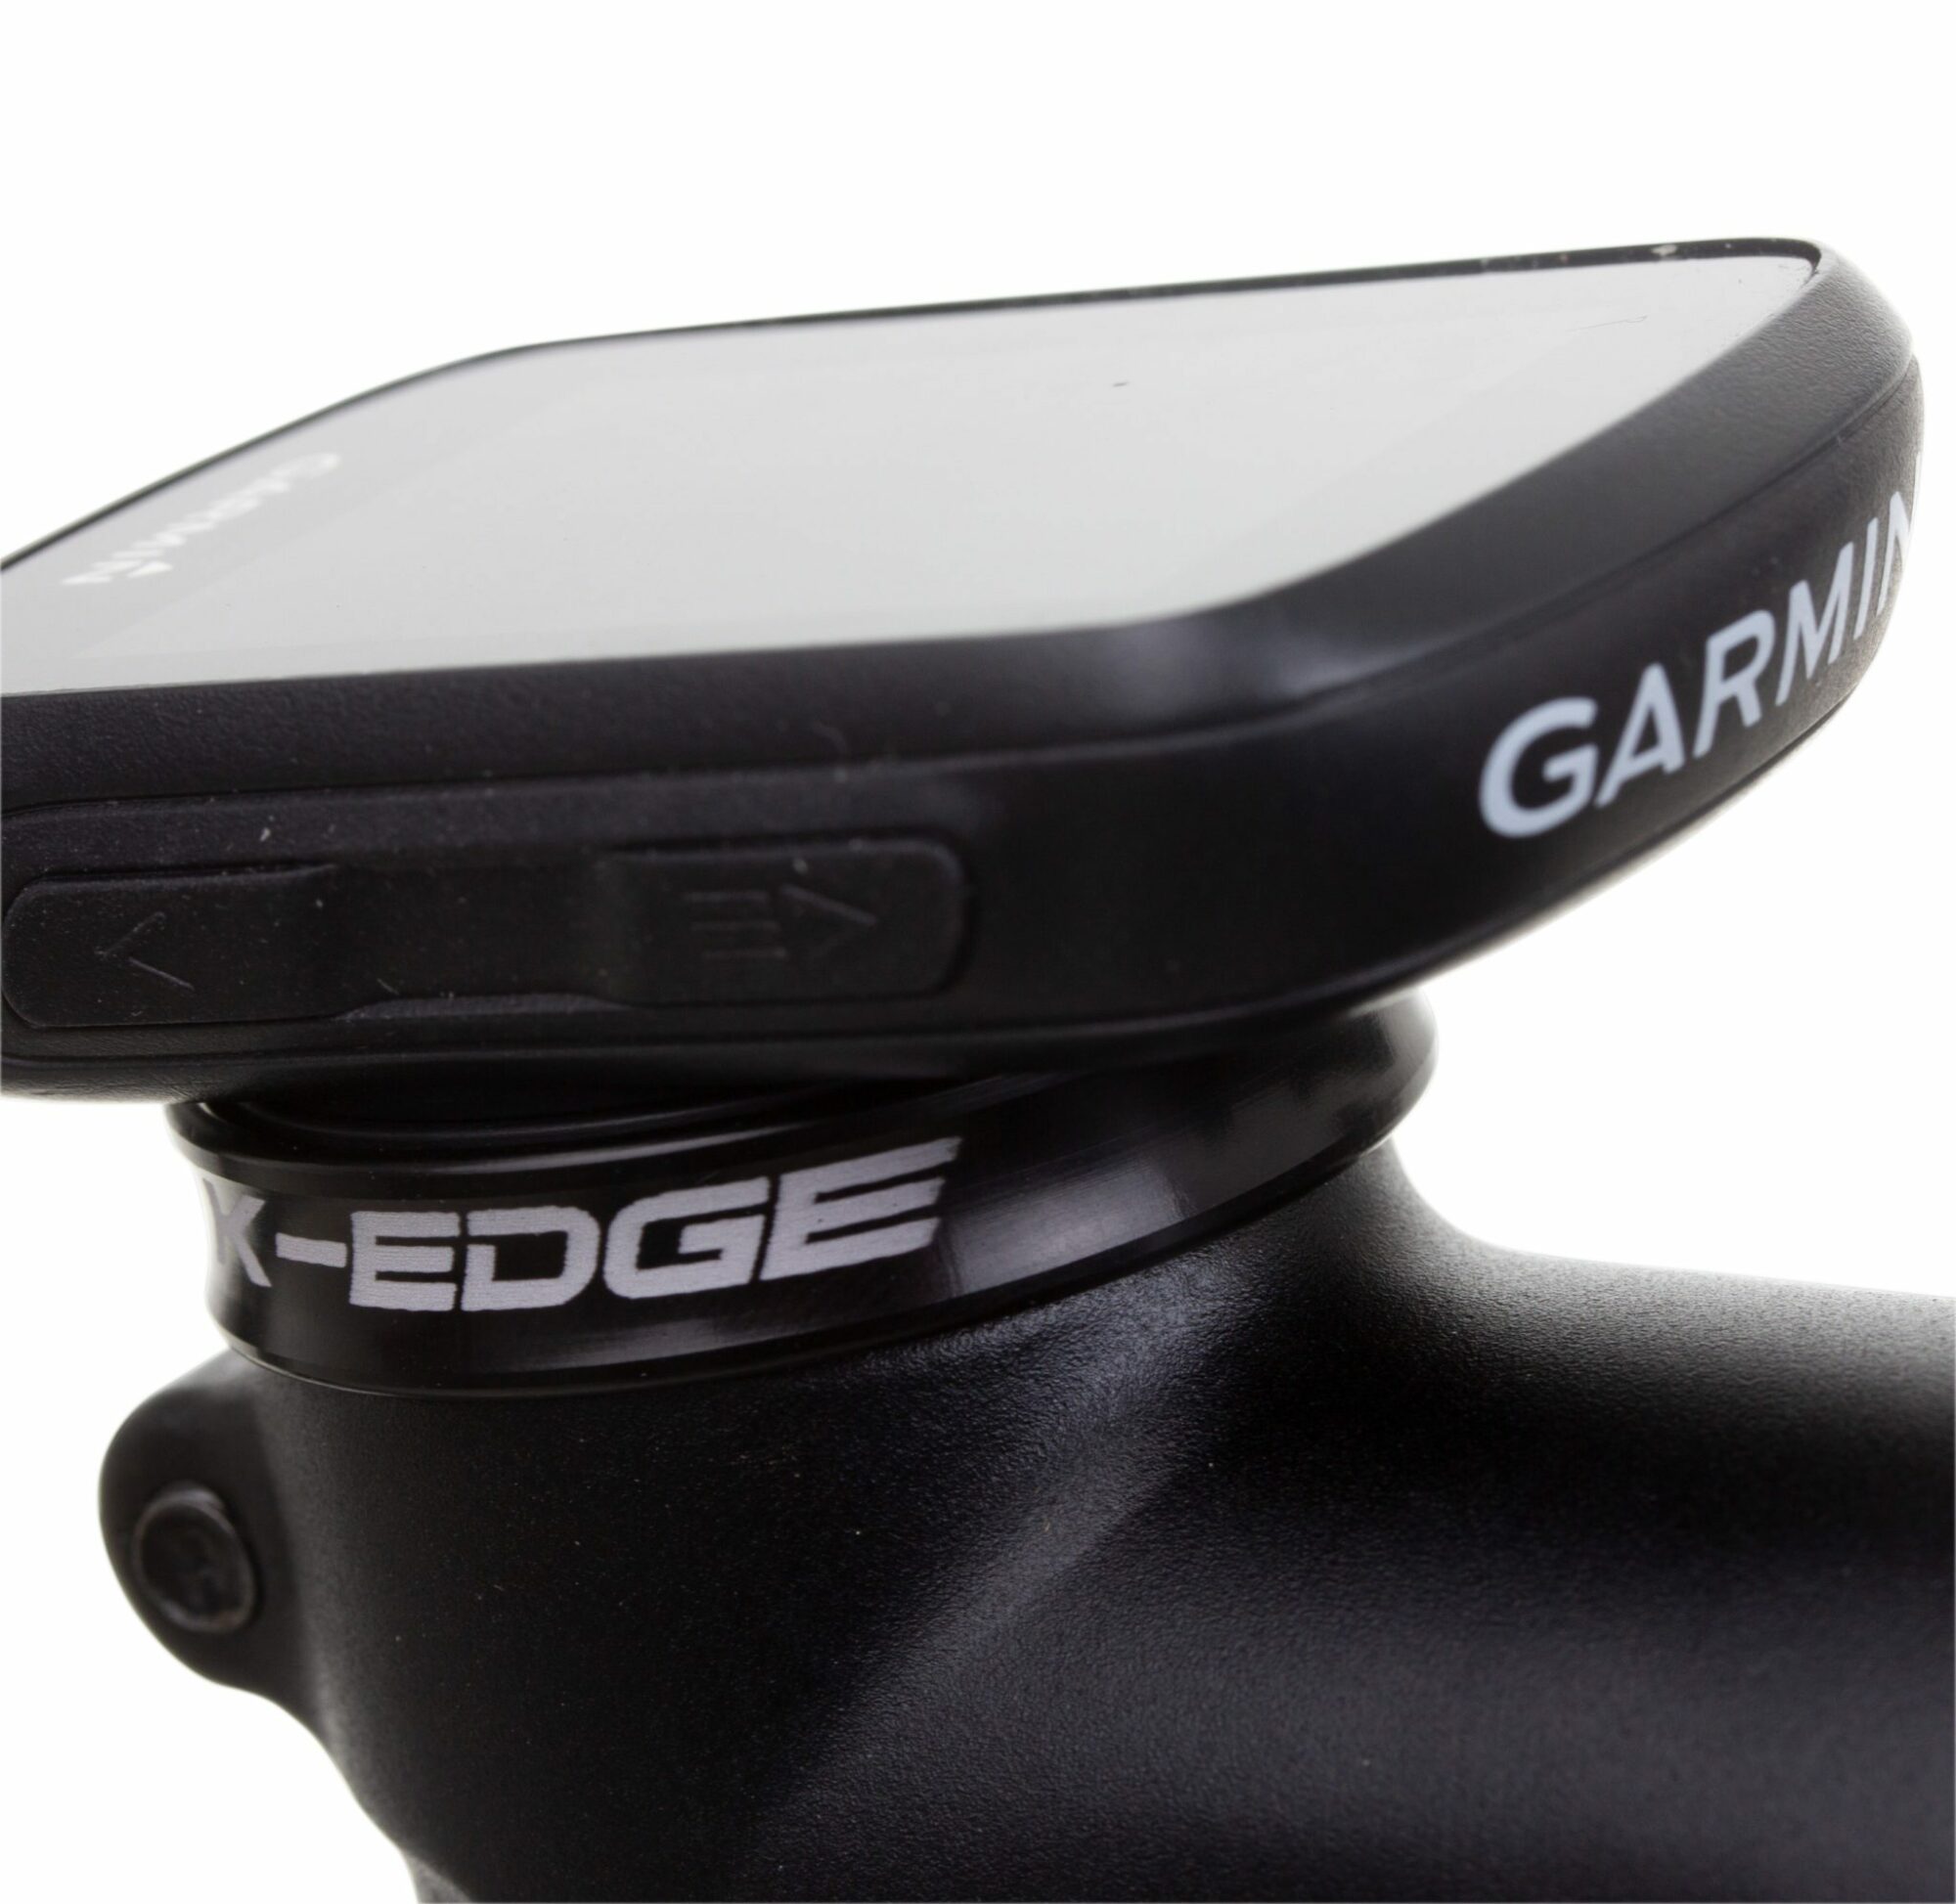 Cycling Bike Bicycle Stem Top Cap Computer Mount GPS Holder For GARMIN Bryton 